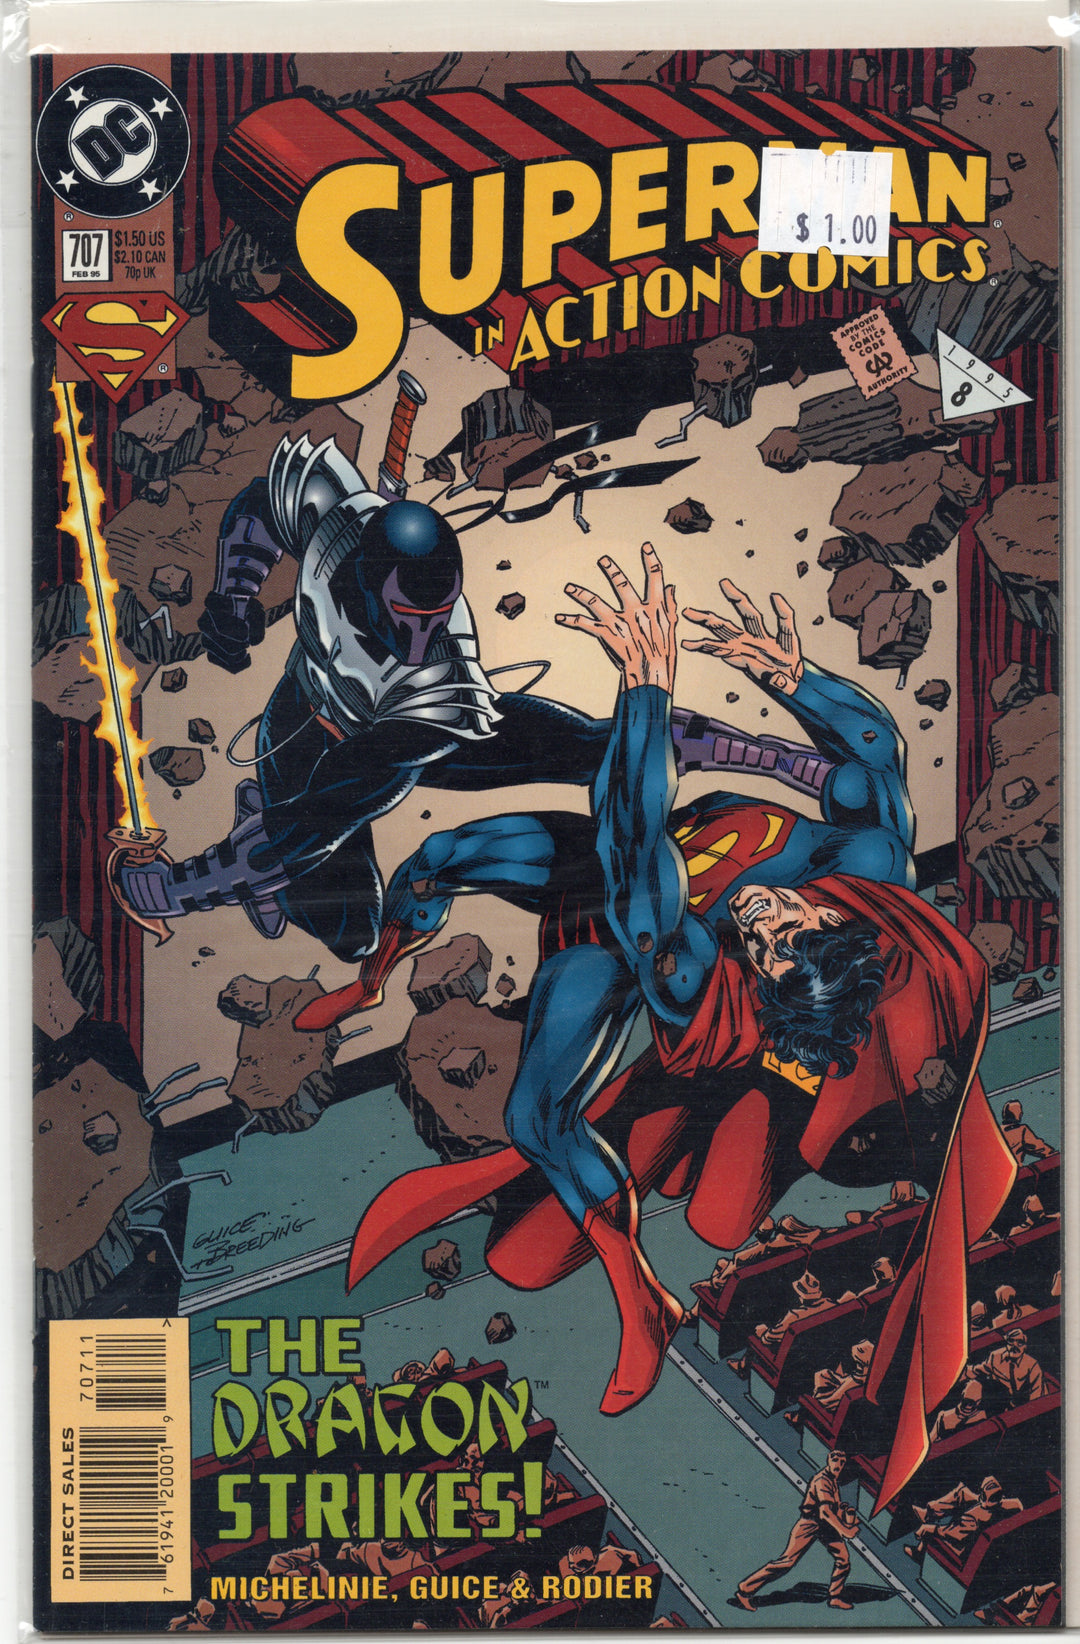 Superman Action Comics #707